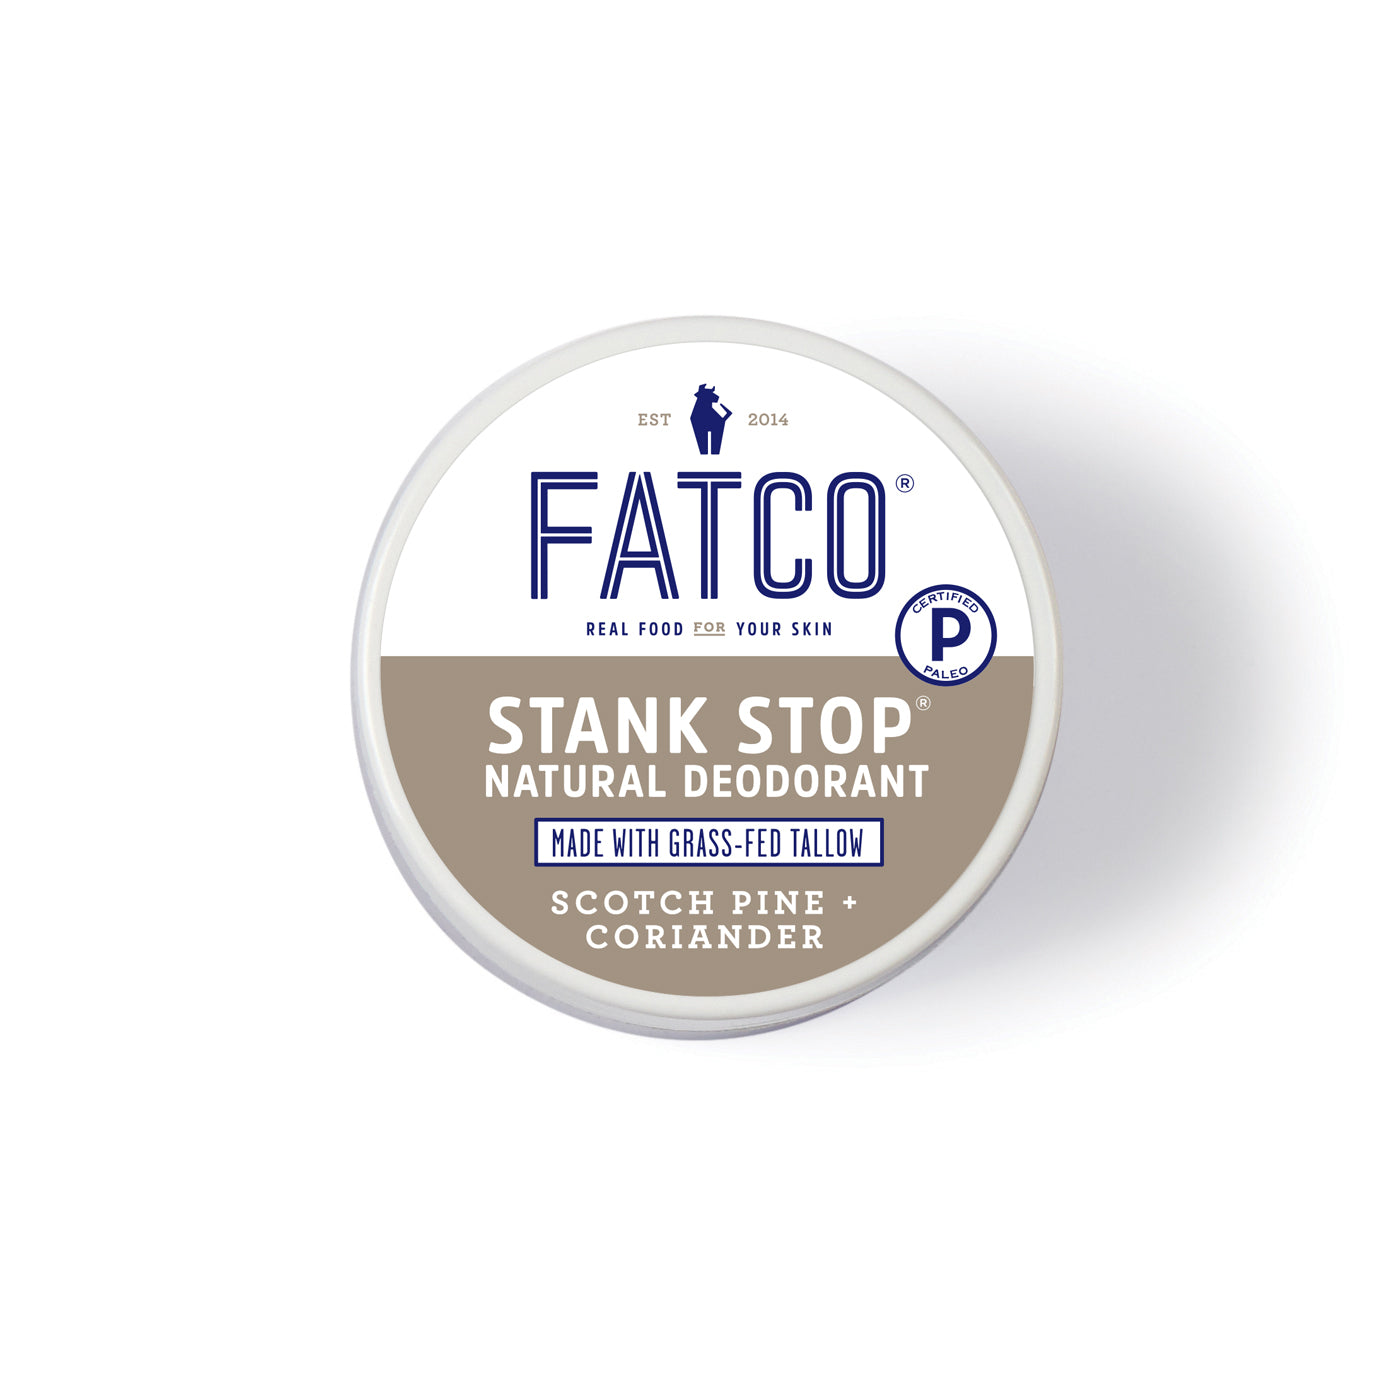 Stank Stop Cream Deodorant, Scotch Pine+Coriander, 2 Oz by FATCO Skincare Products